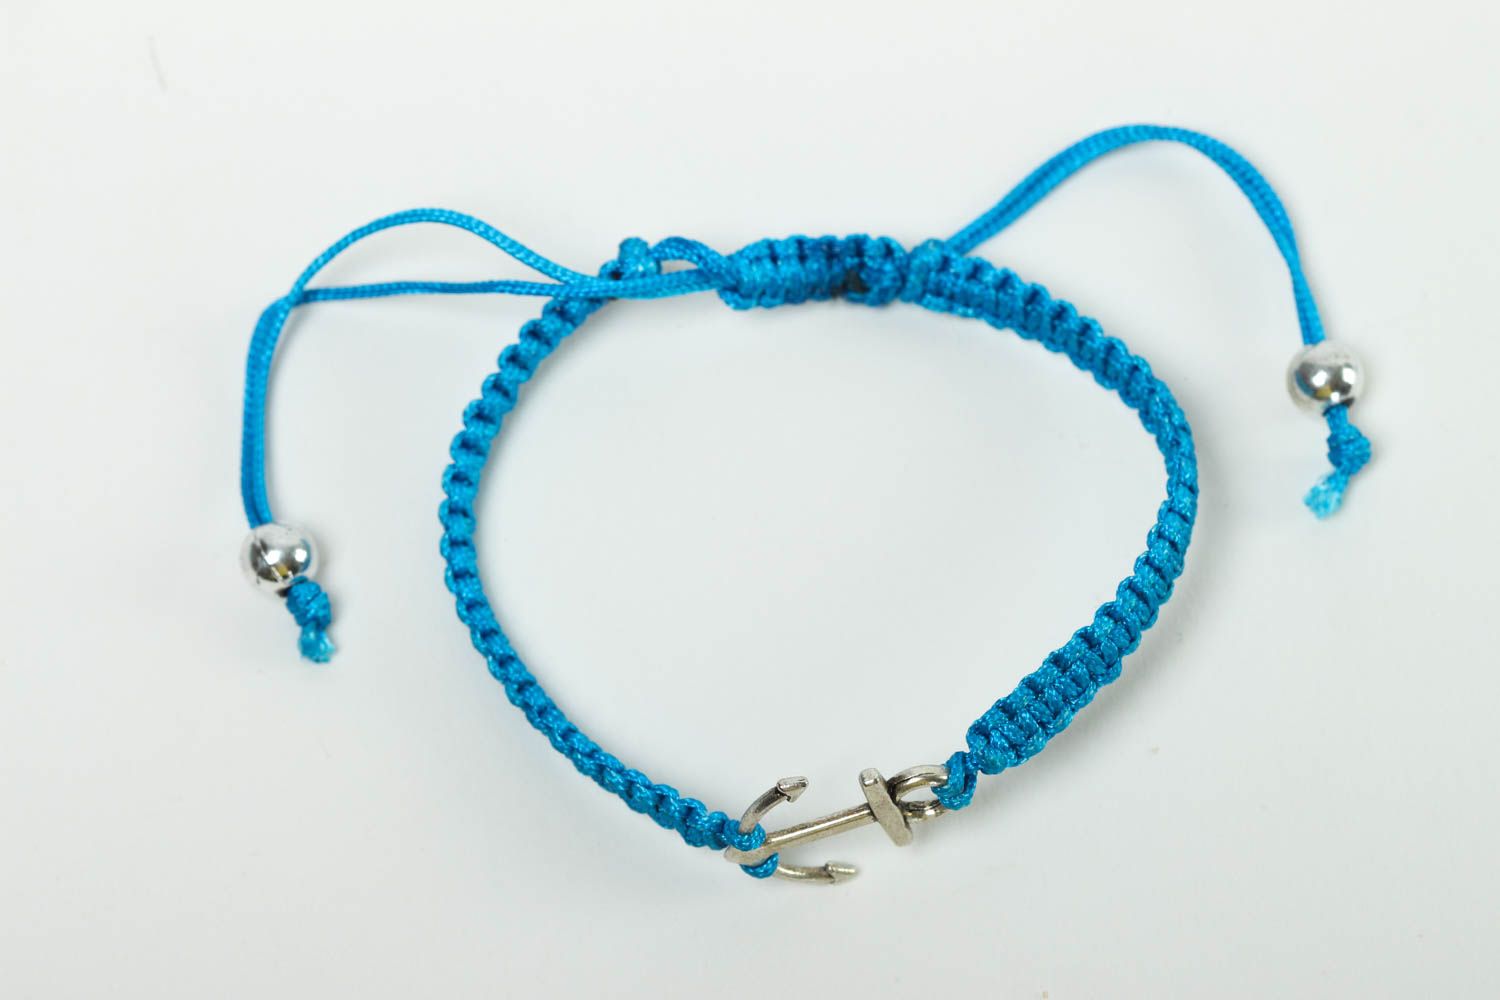 Handmade woven thread bracelet fashion accessories friendship bracelet designs photo 2